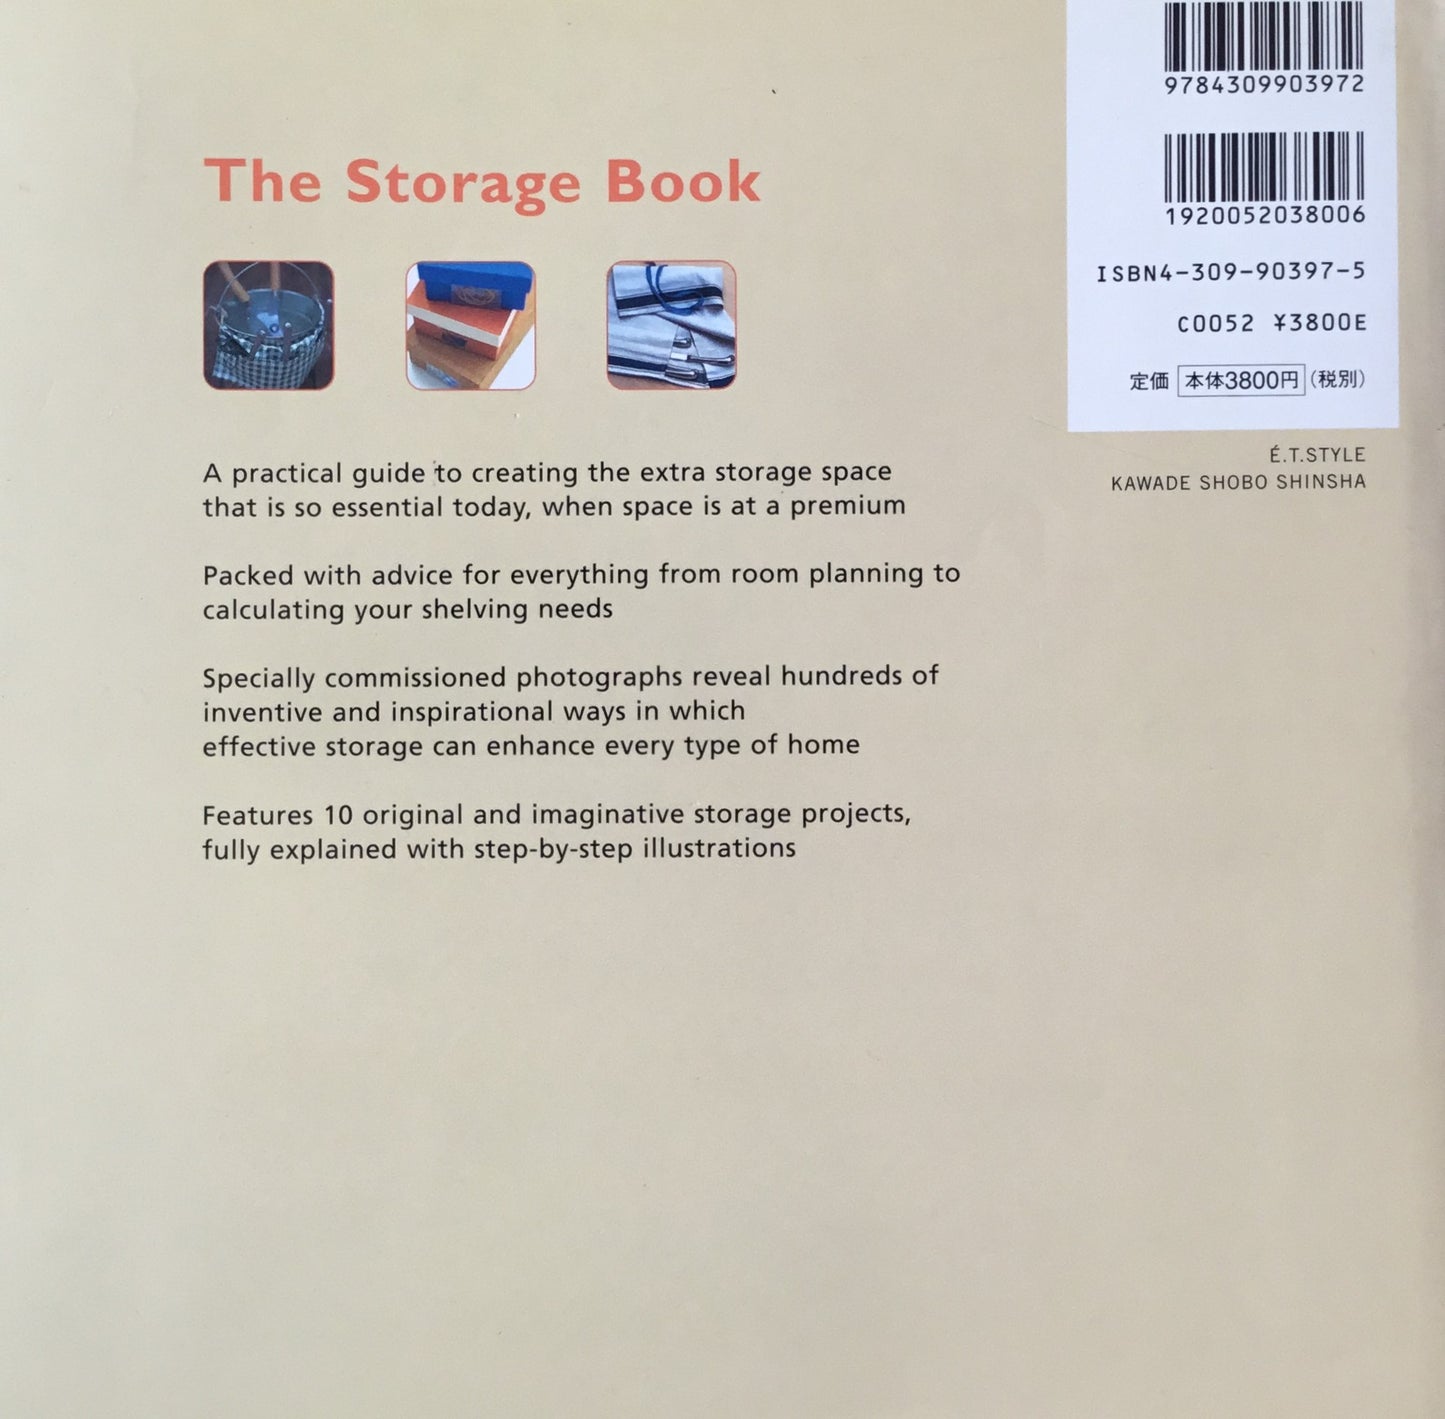 The Storage Book　Cynthia Inions　日本語版